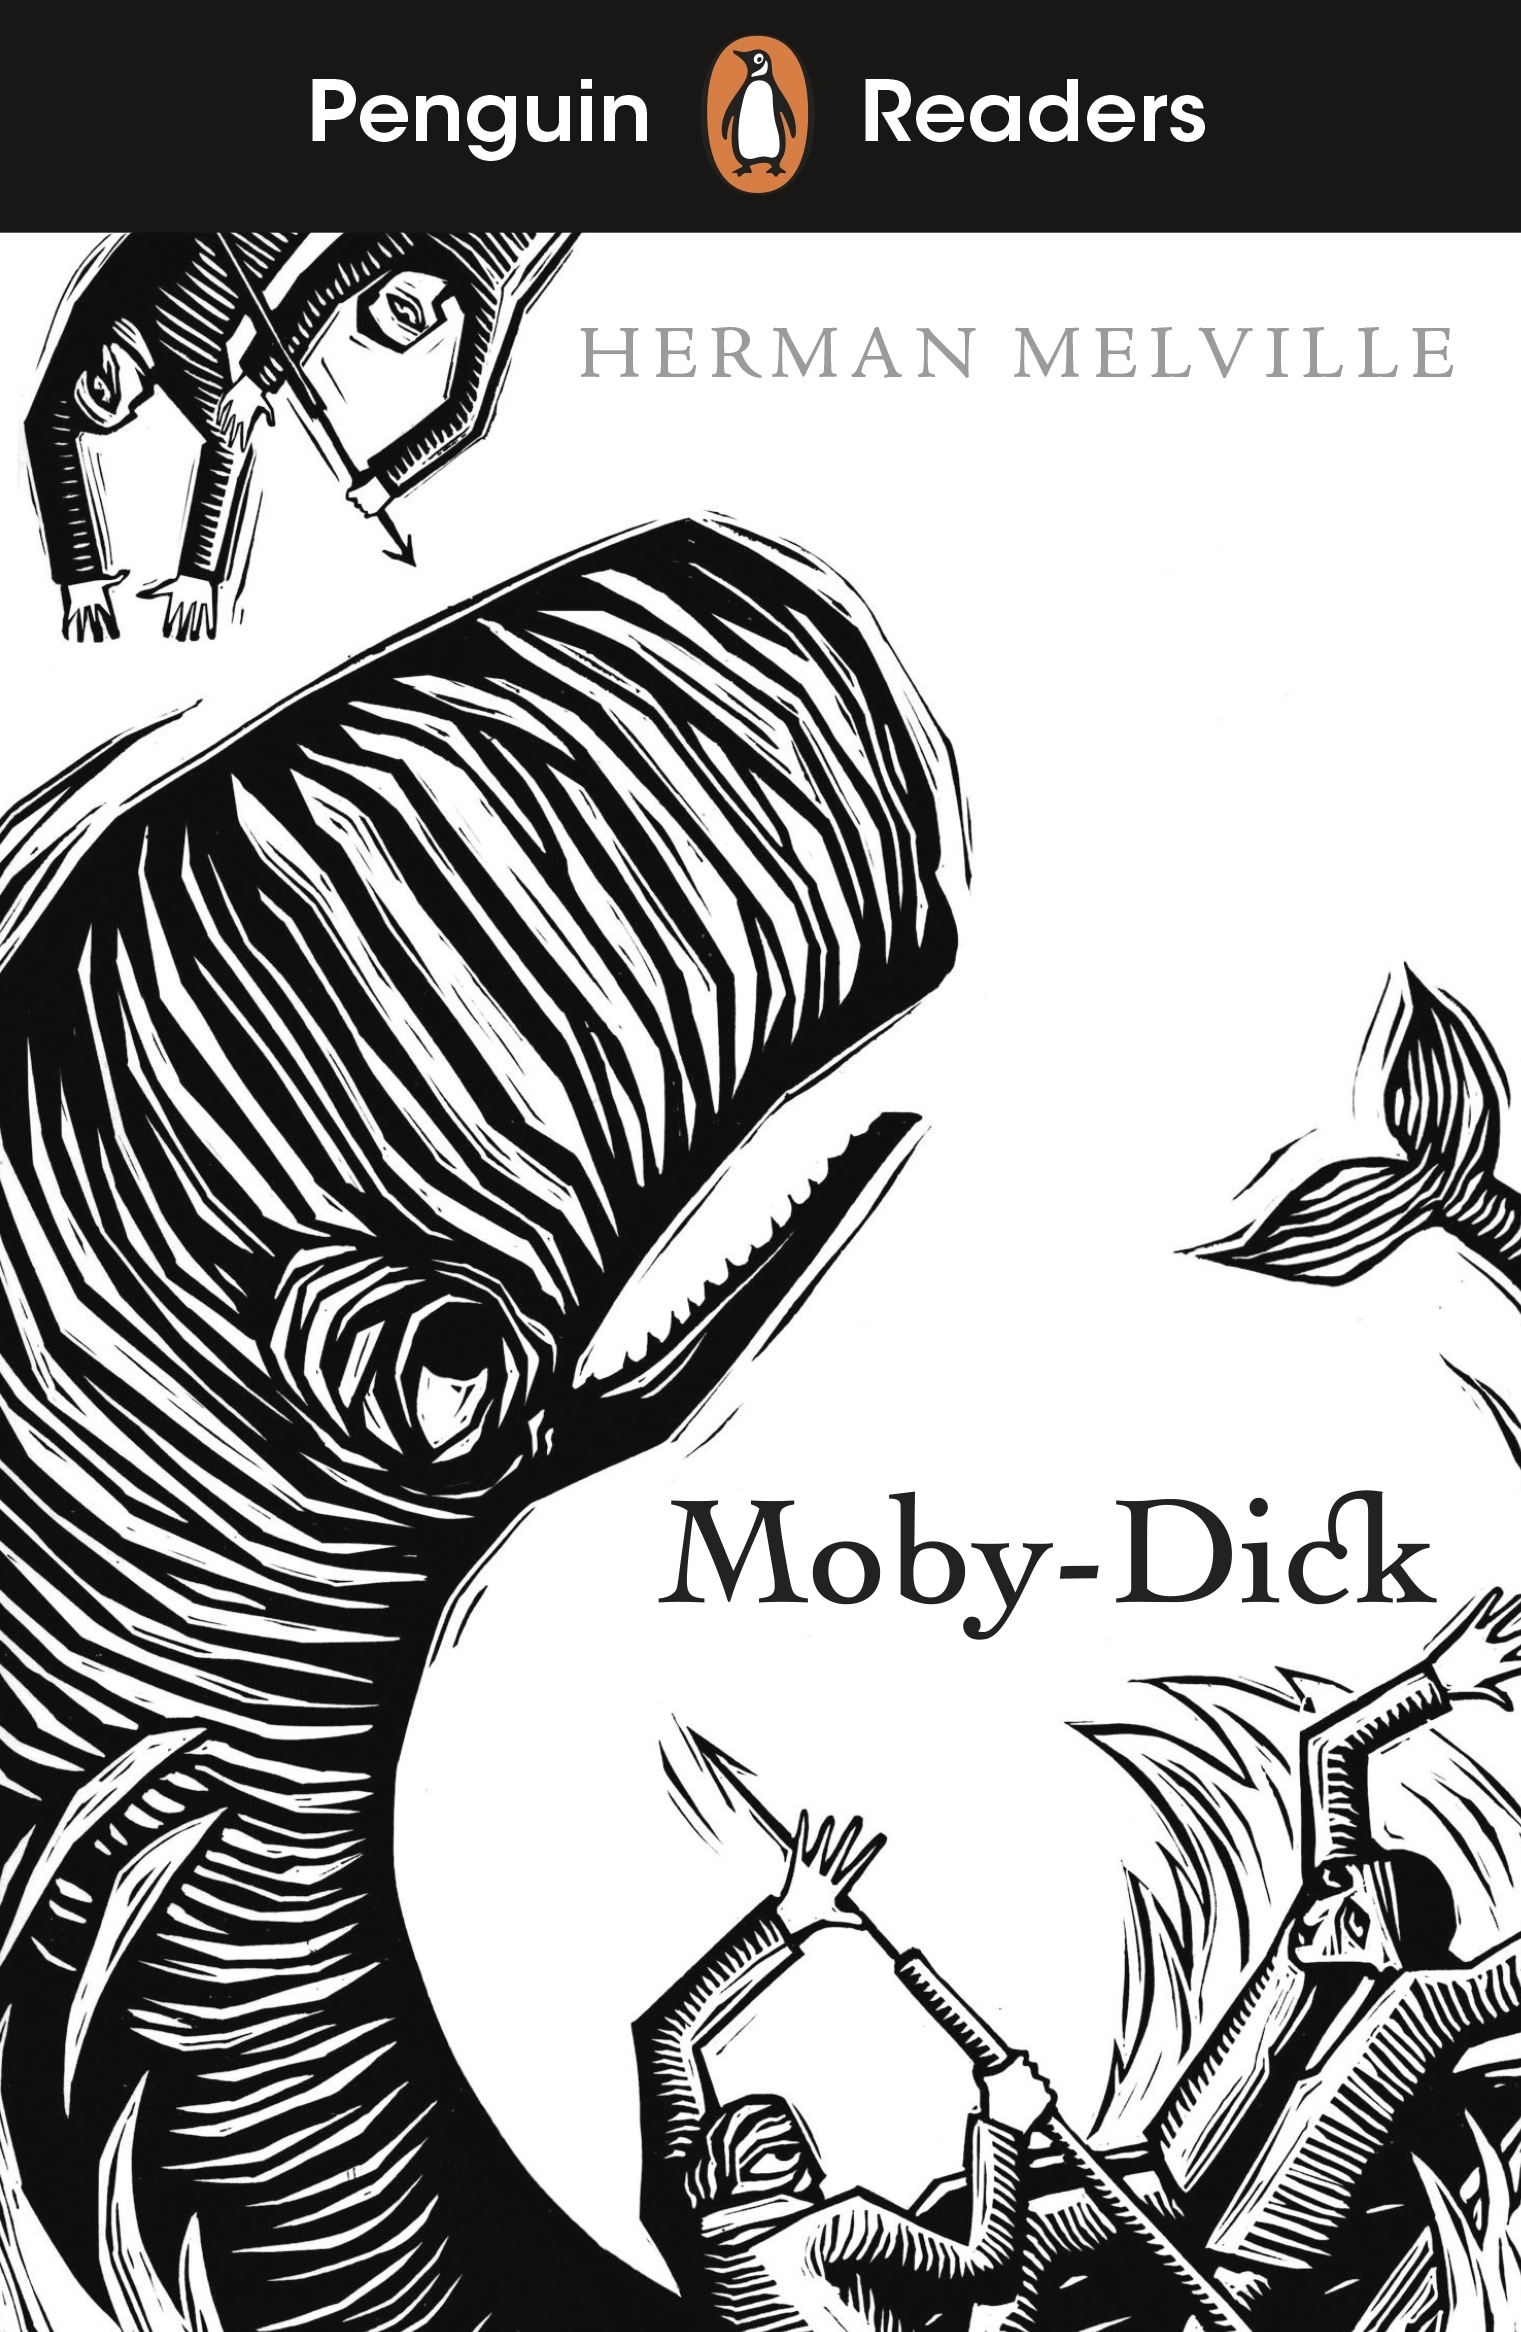 Book “Penguin Readers Level 7: Moby Dick (ELT Graded Reader)” by Herman Melville — November 5, 2020